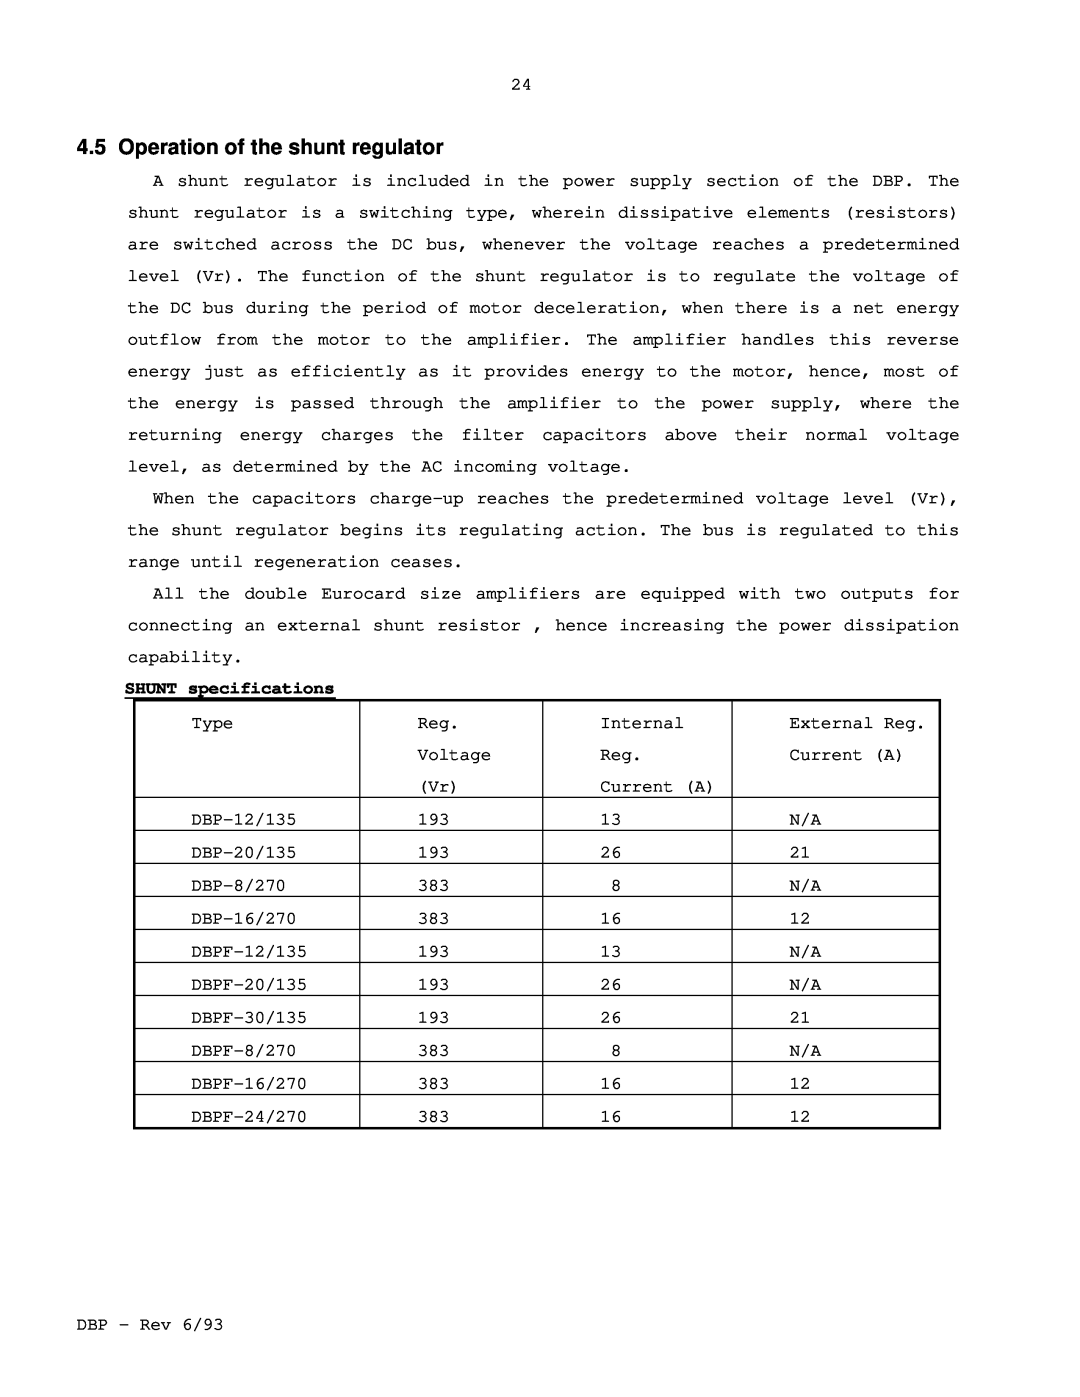 Elmo DBP SERIES manual Operation of the shunt regulator, SHUNT specifications 